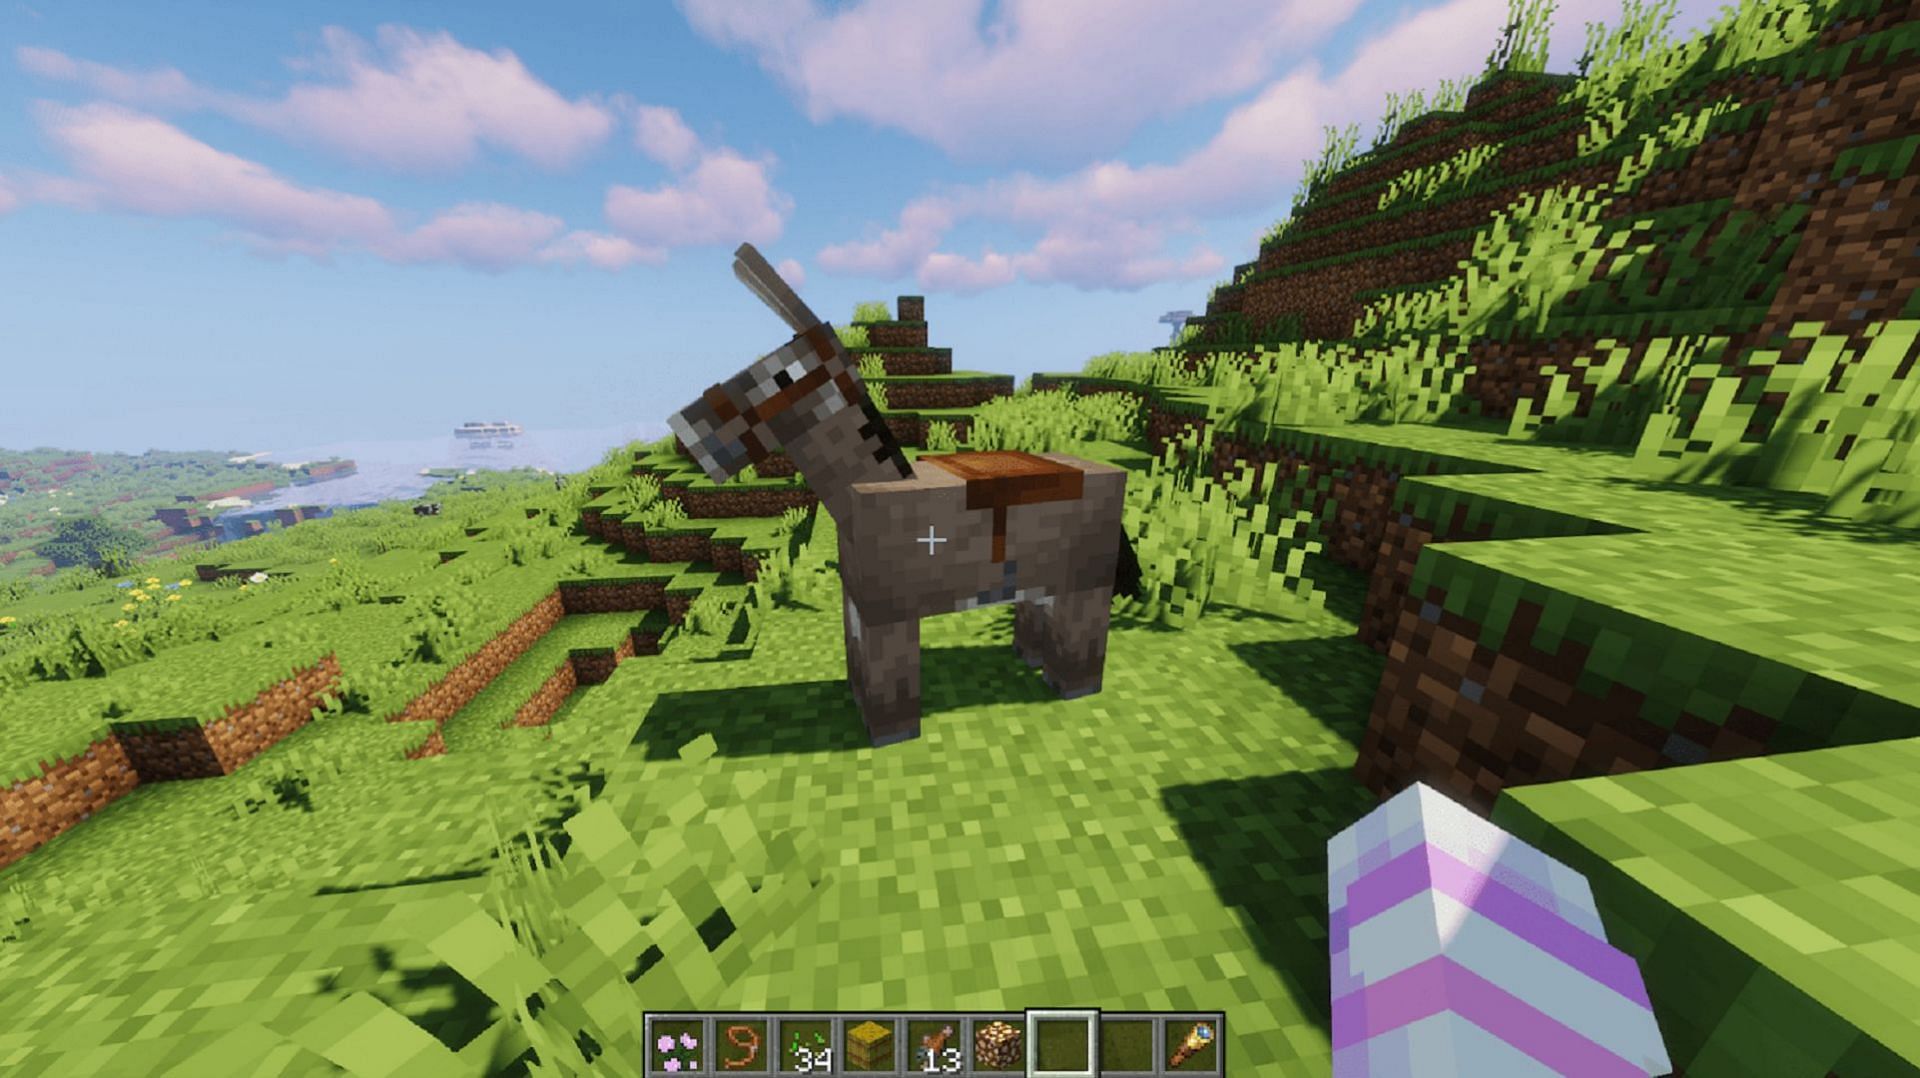 A saddled donkey in Minecraft (Image via Mojang)